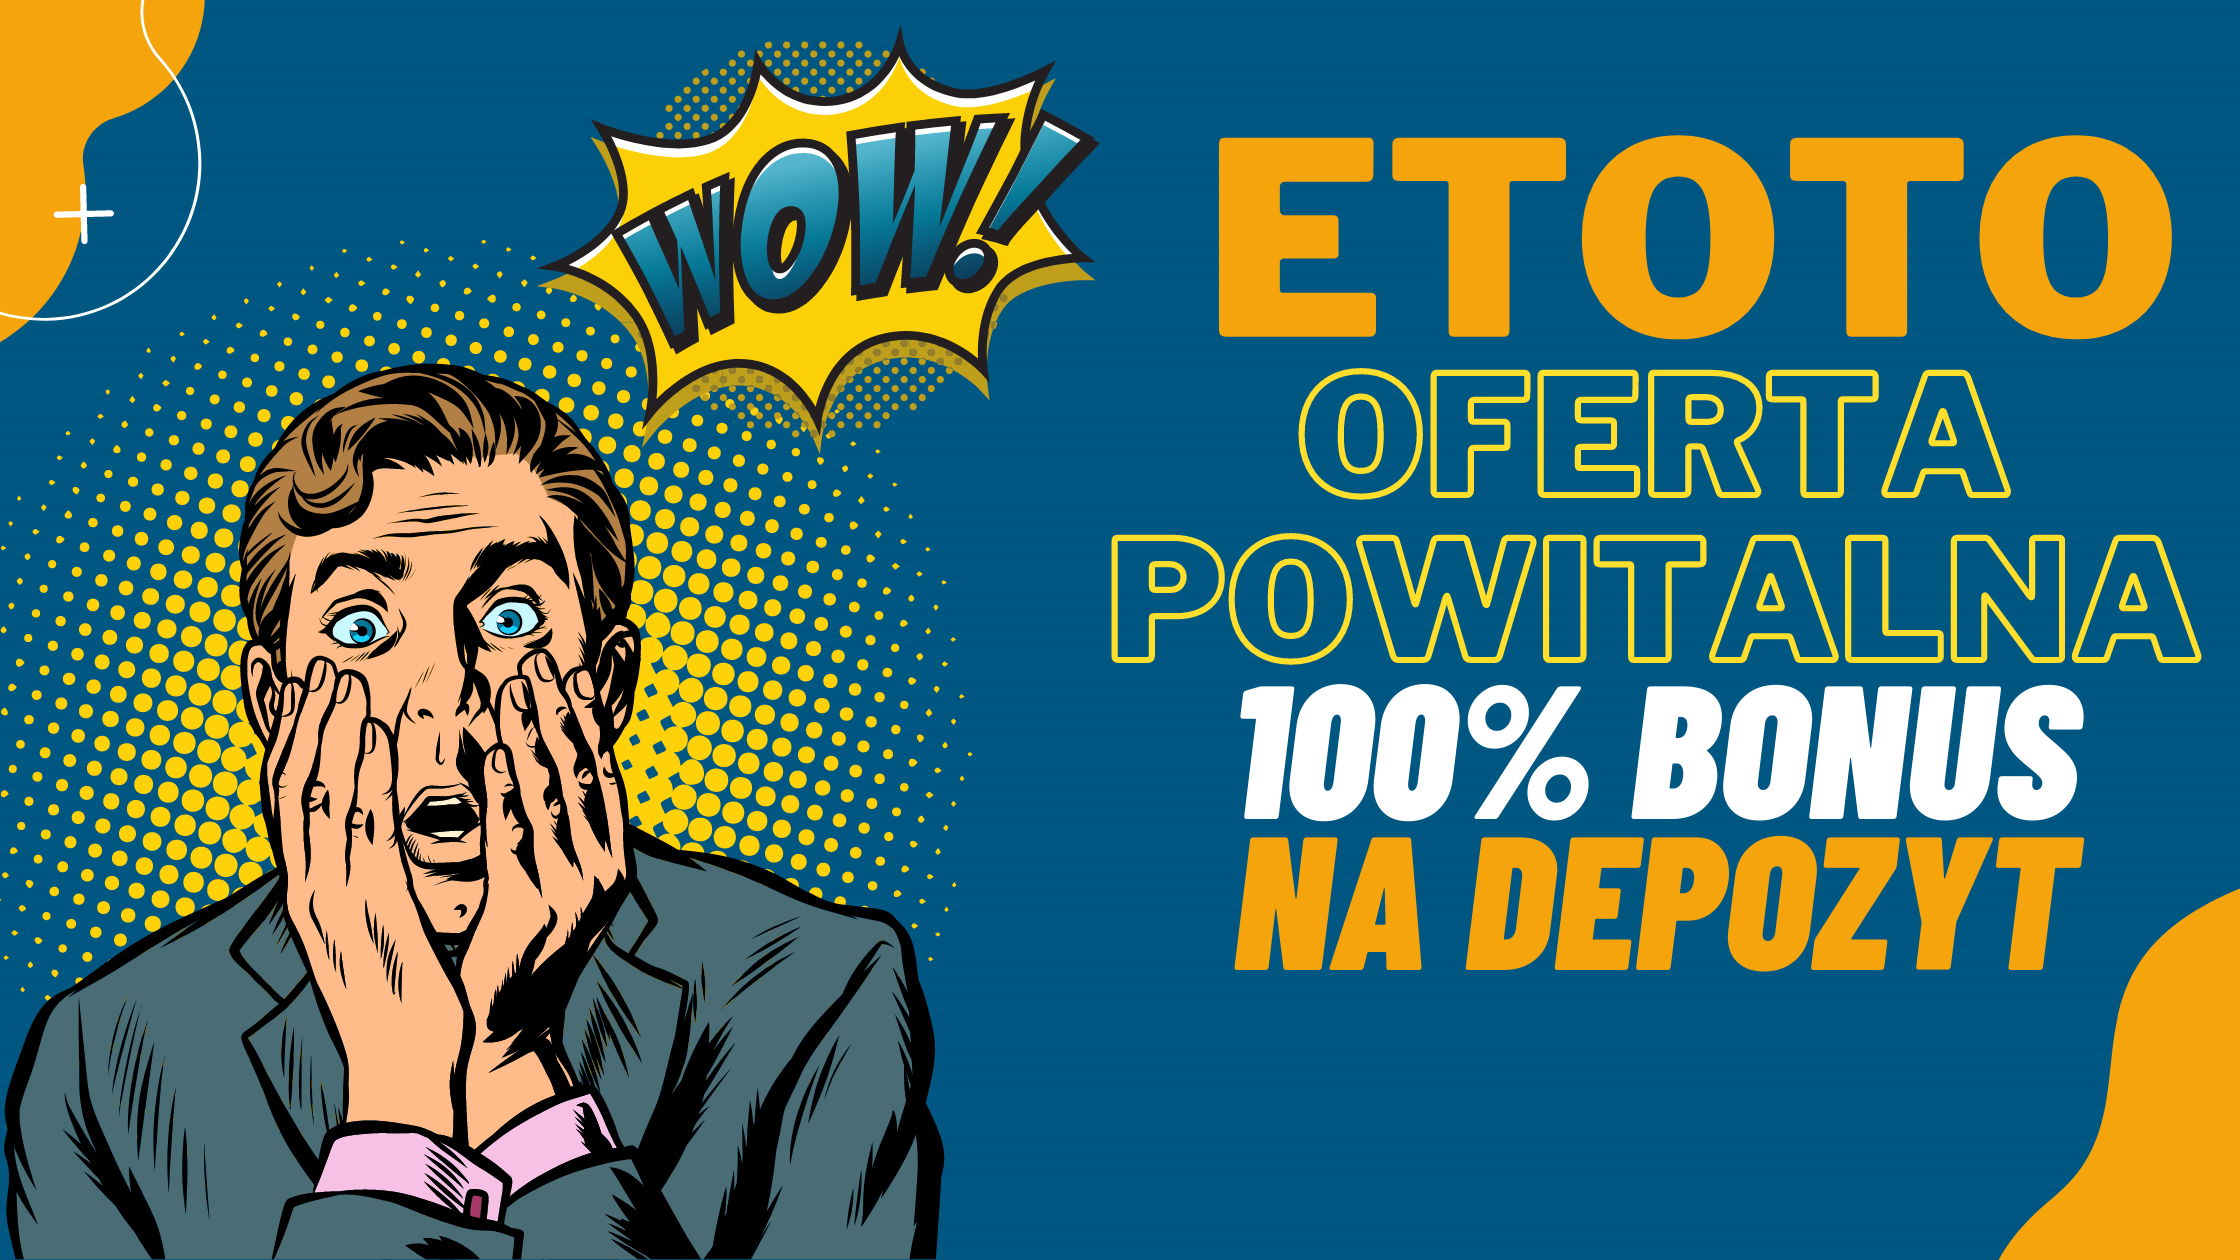 Bukmacher Etoto oferta powitalna - 100% bonus na depozyt